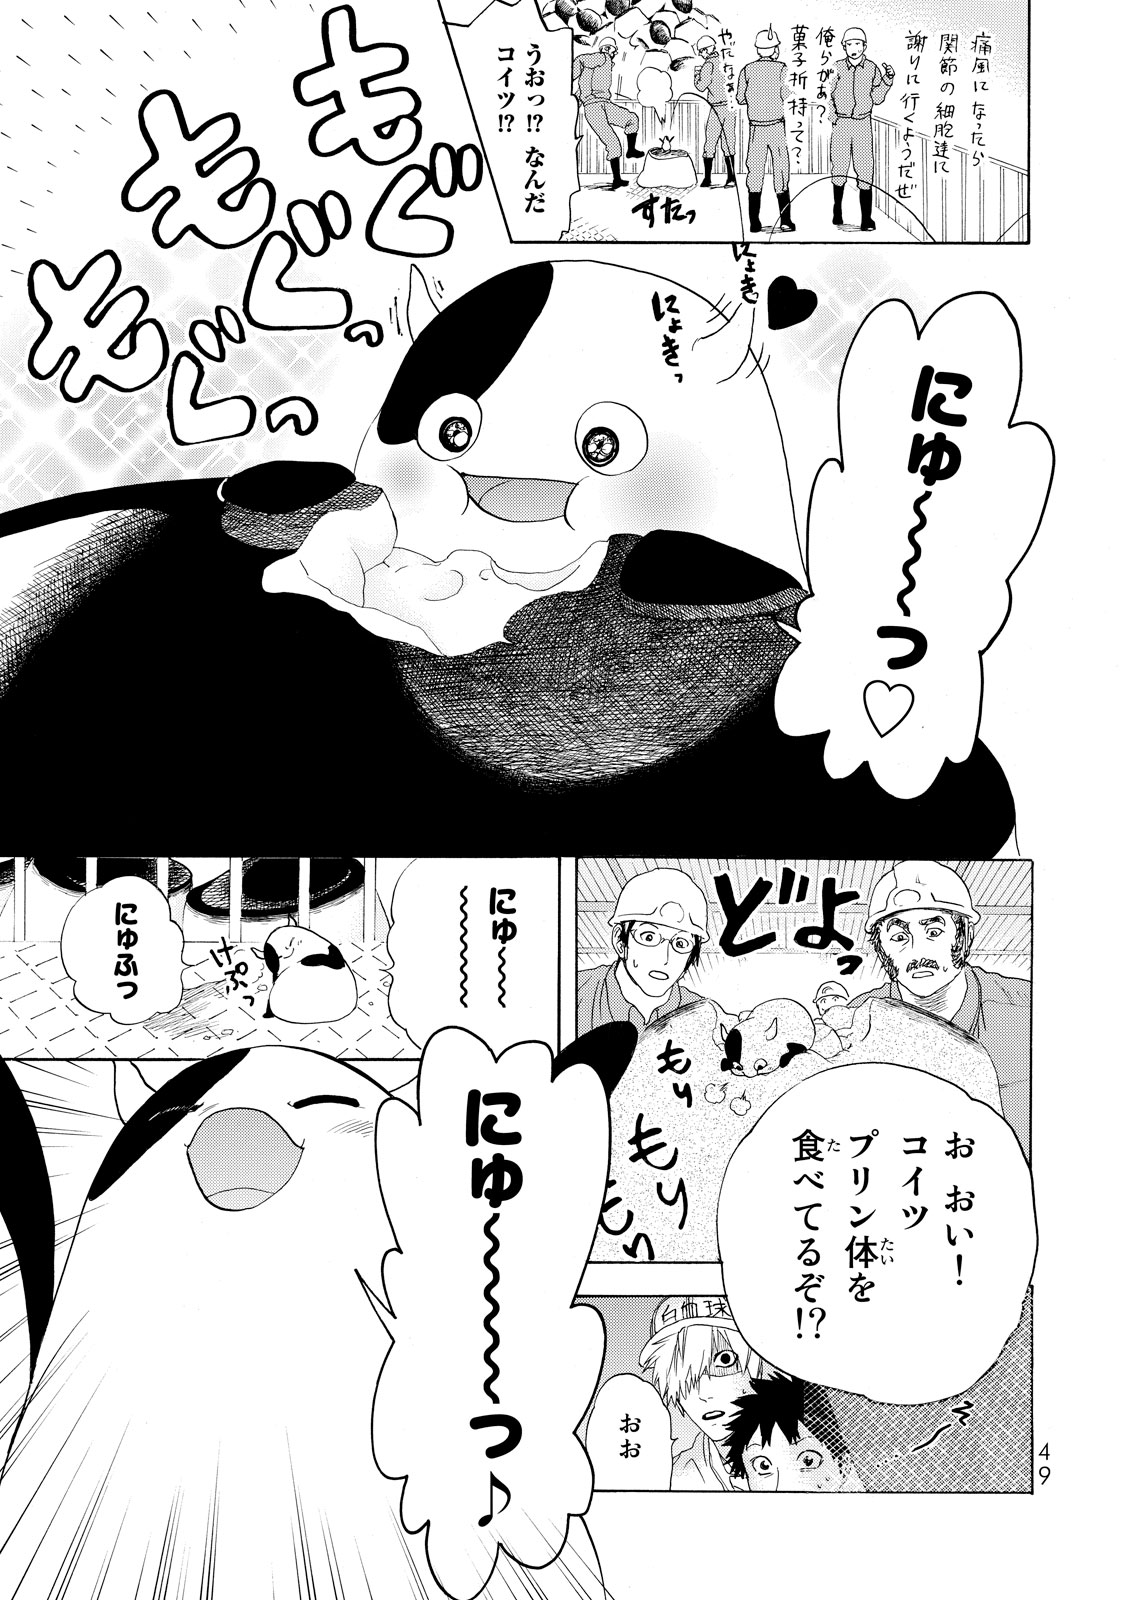 Hataraku Saibou - Chapter 21 - Page 5